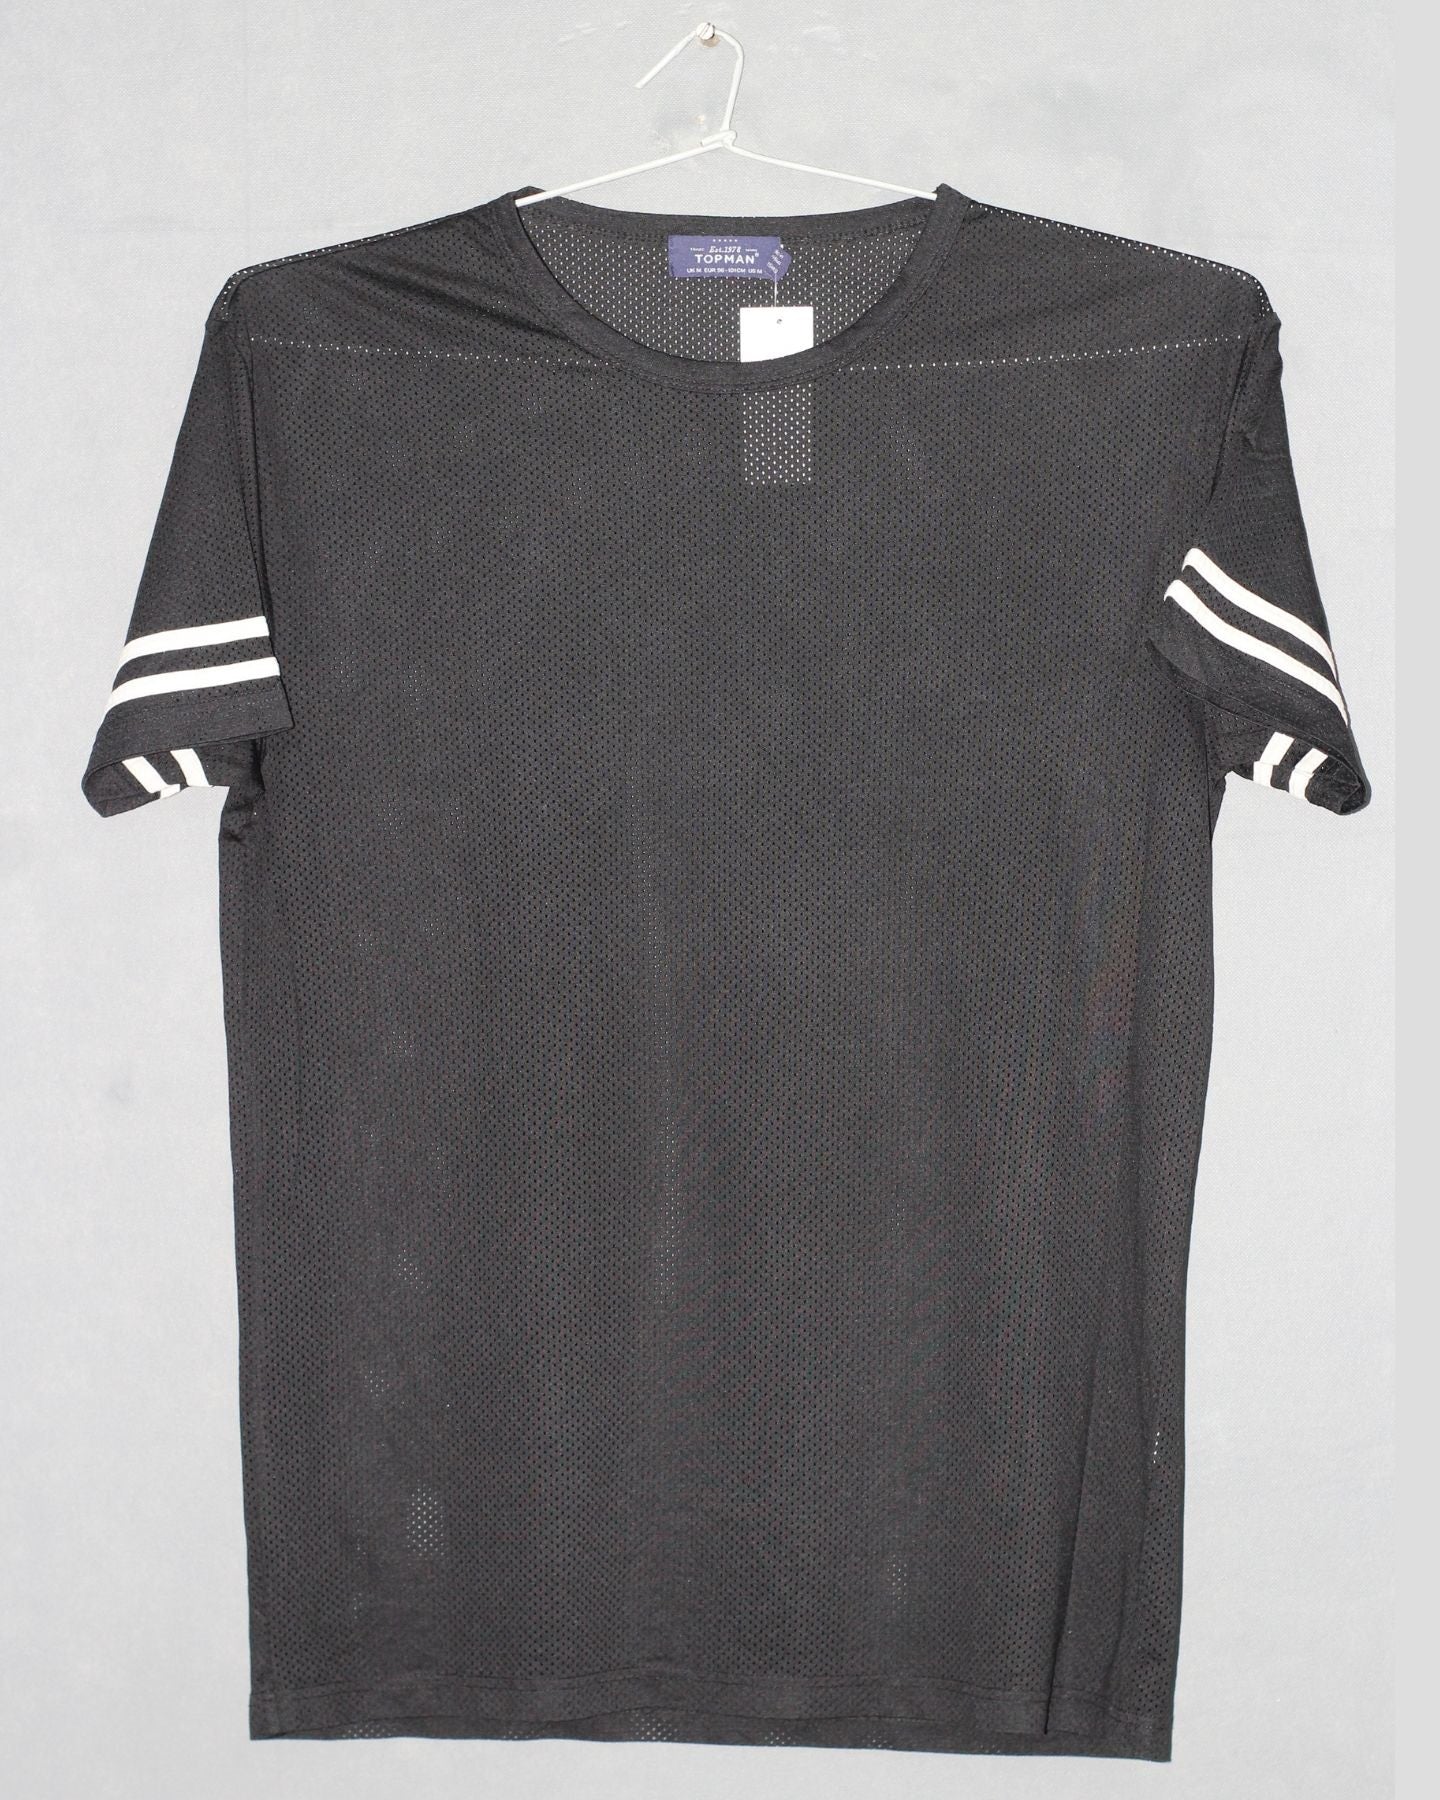 Top Man Branded Original For Polyester Sports Round Neck Men T Shirt